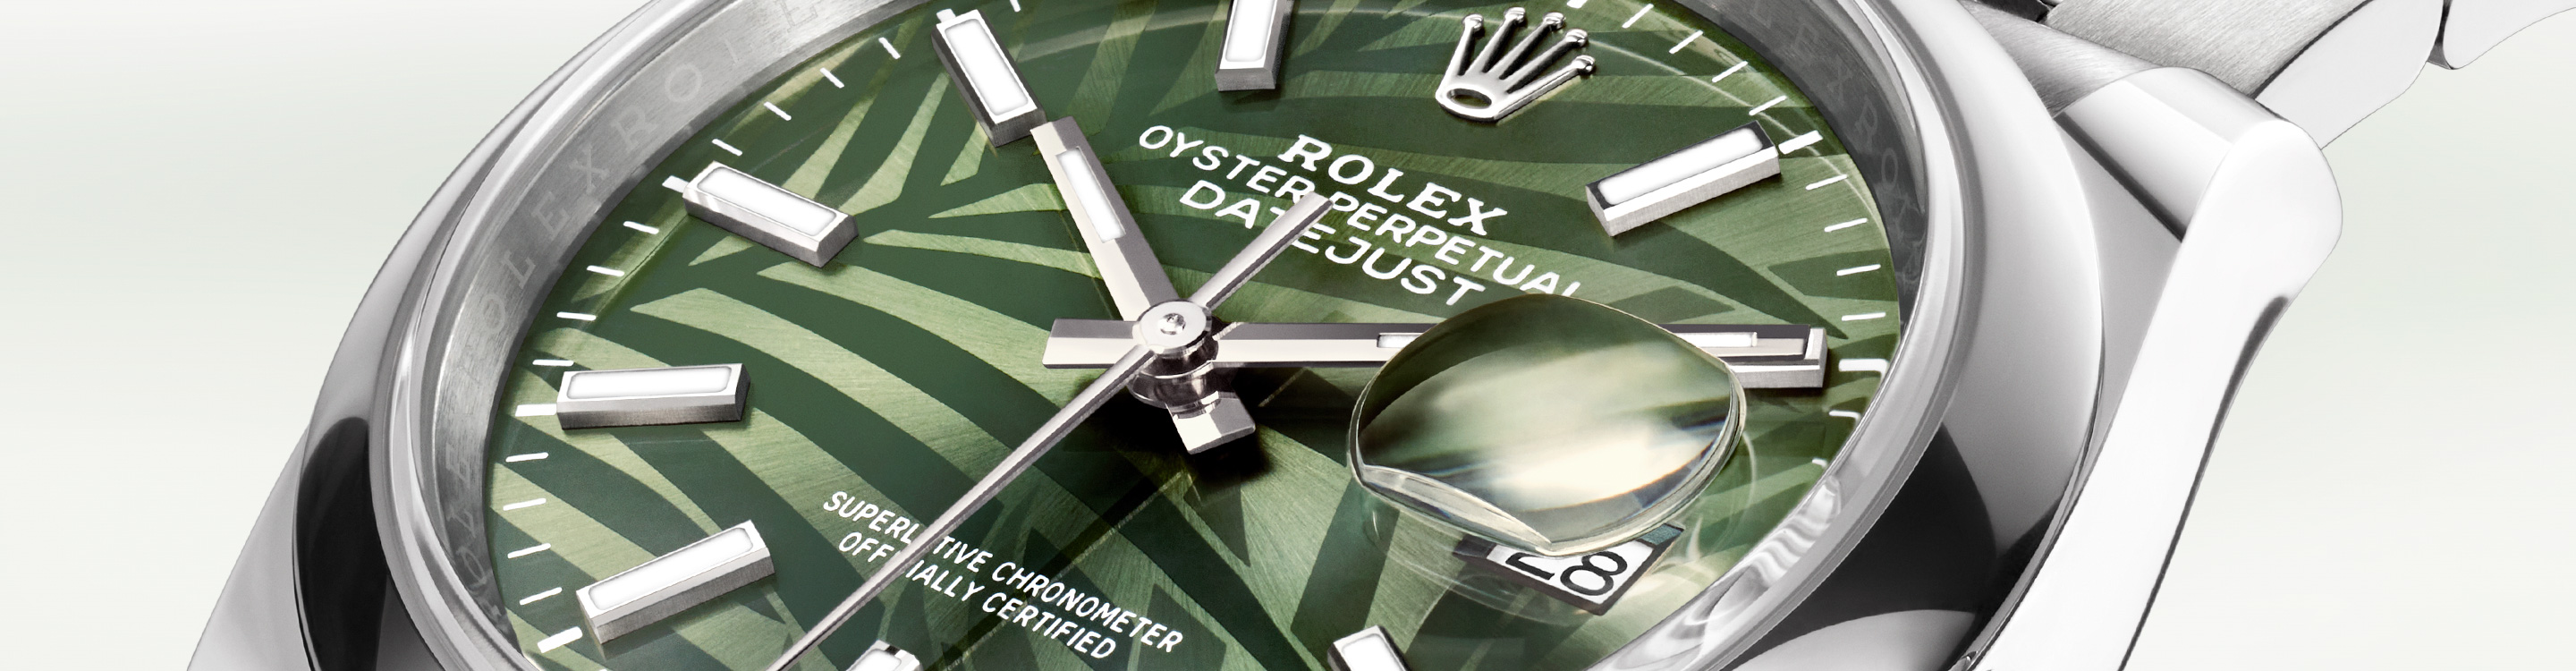 Esfera Reloj Rolex Oyster Perpetual en Grassy